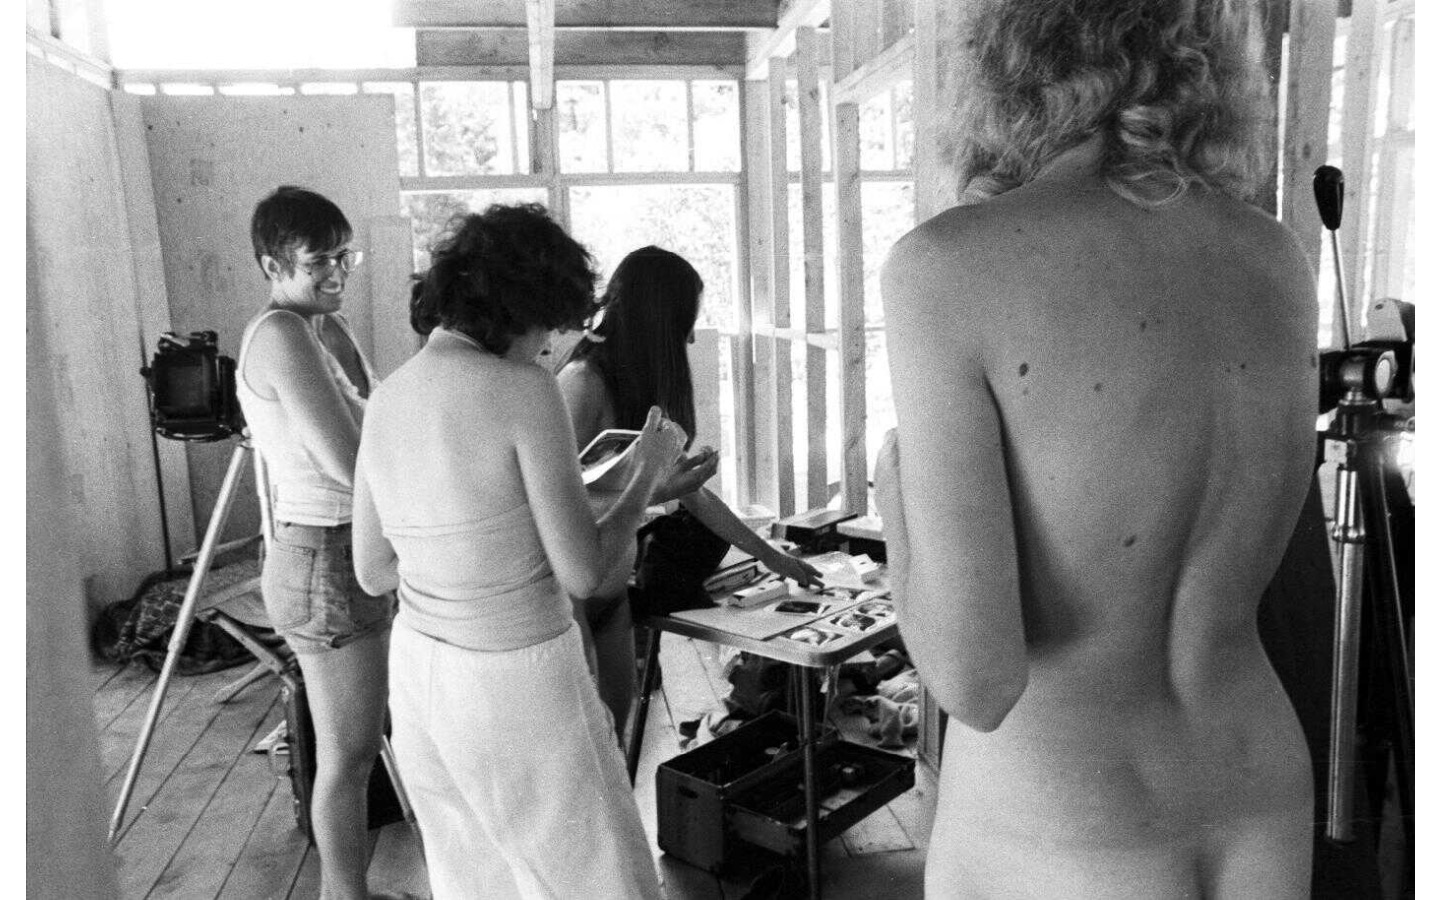 Lesbian commune Oregon 1970s